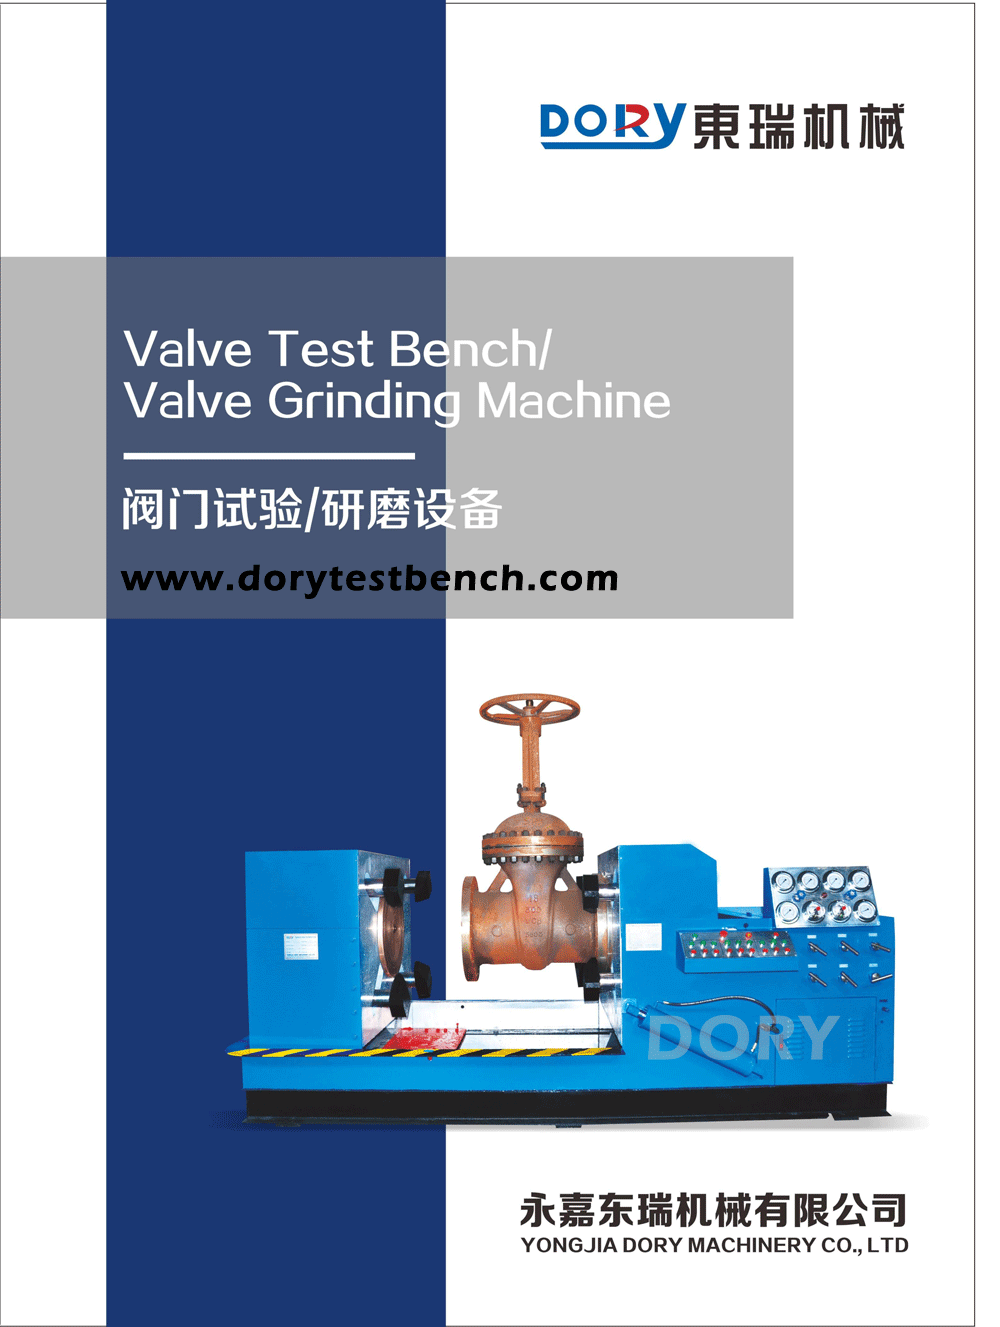 Dory Valve testing bench